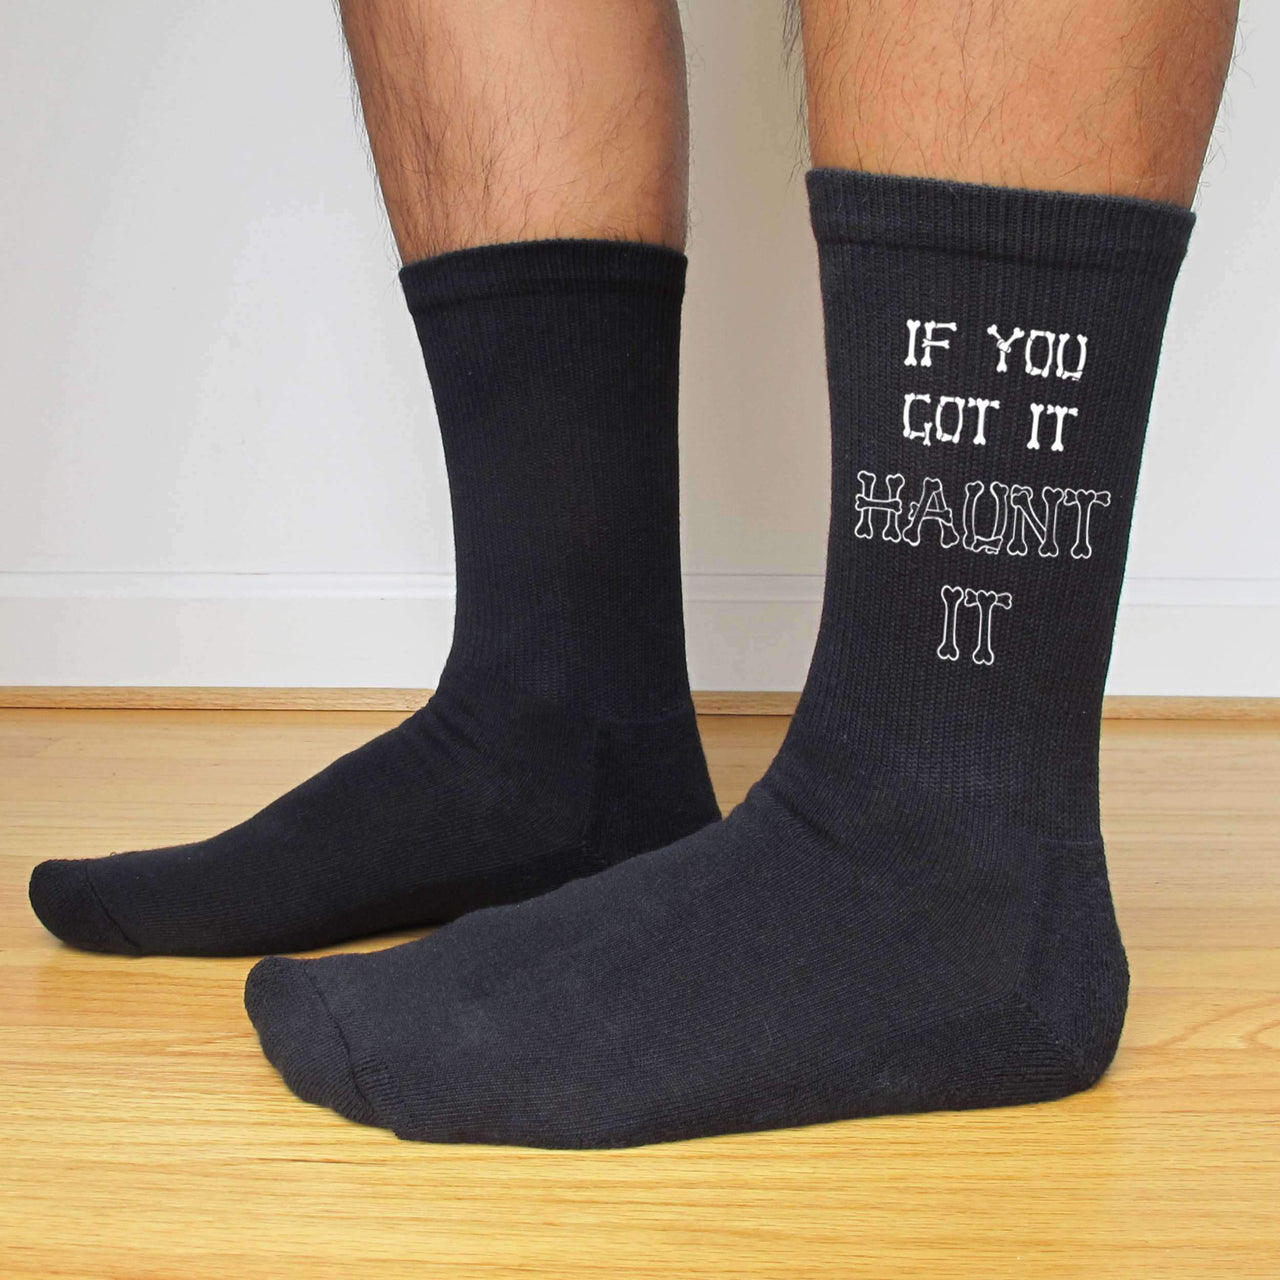 Fun and Festive Halloween Socks | Sockprints